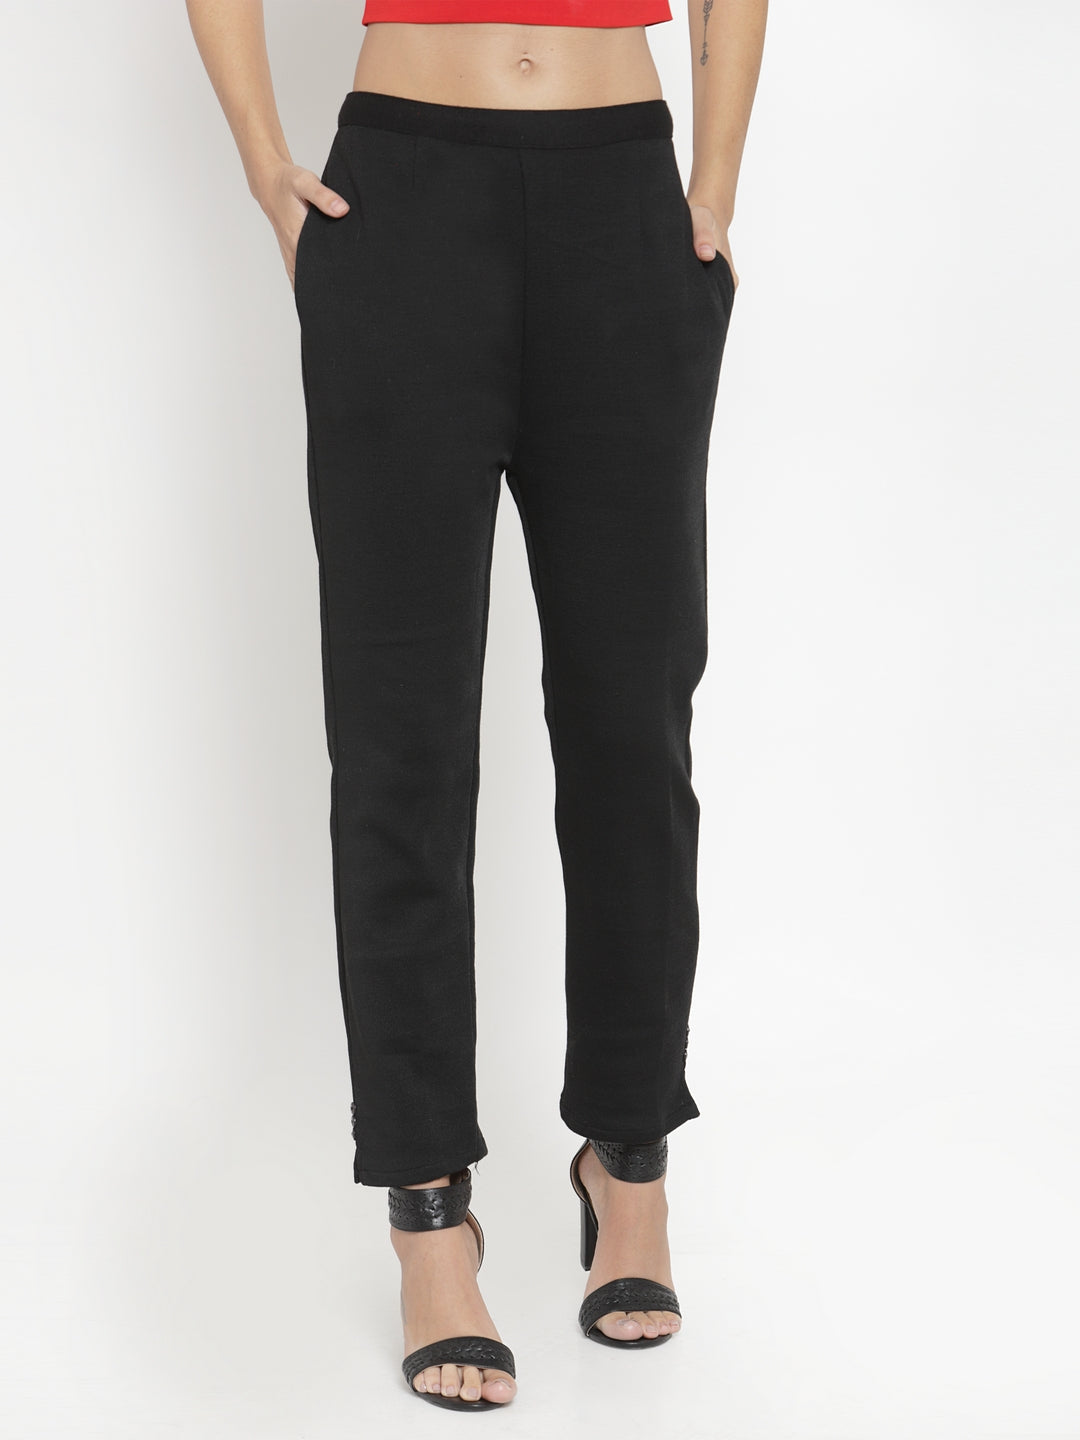 Clora Black & Maroon Solid Woolen Trouser (Pack of 2)